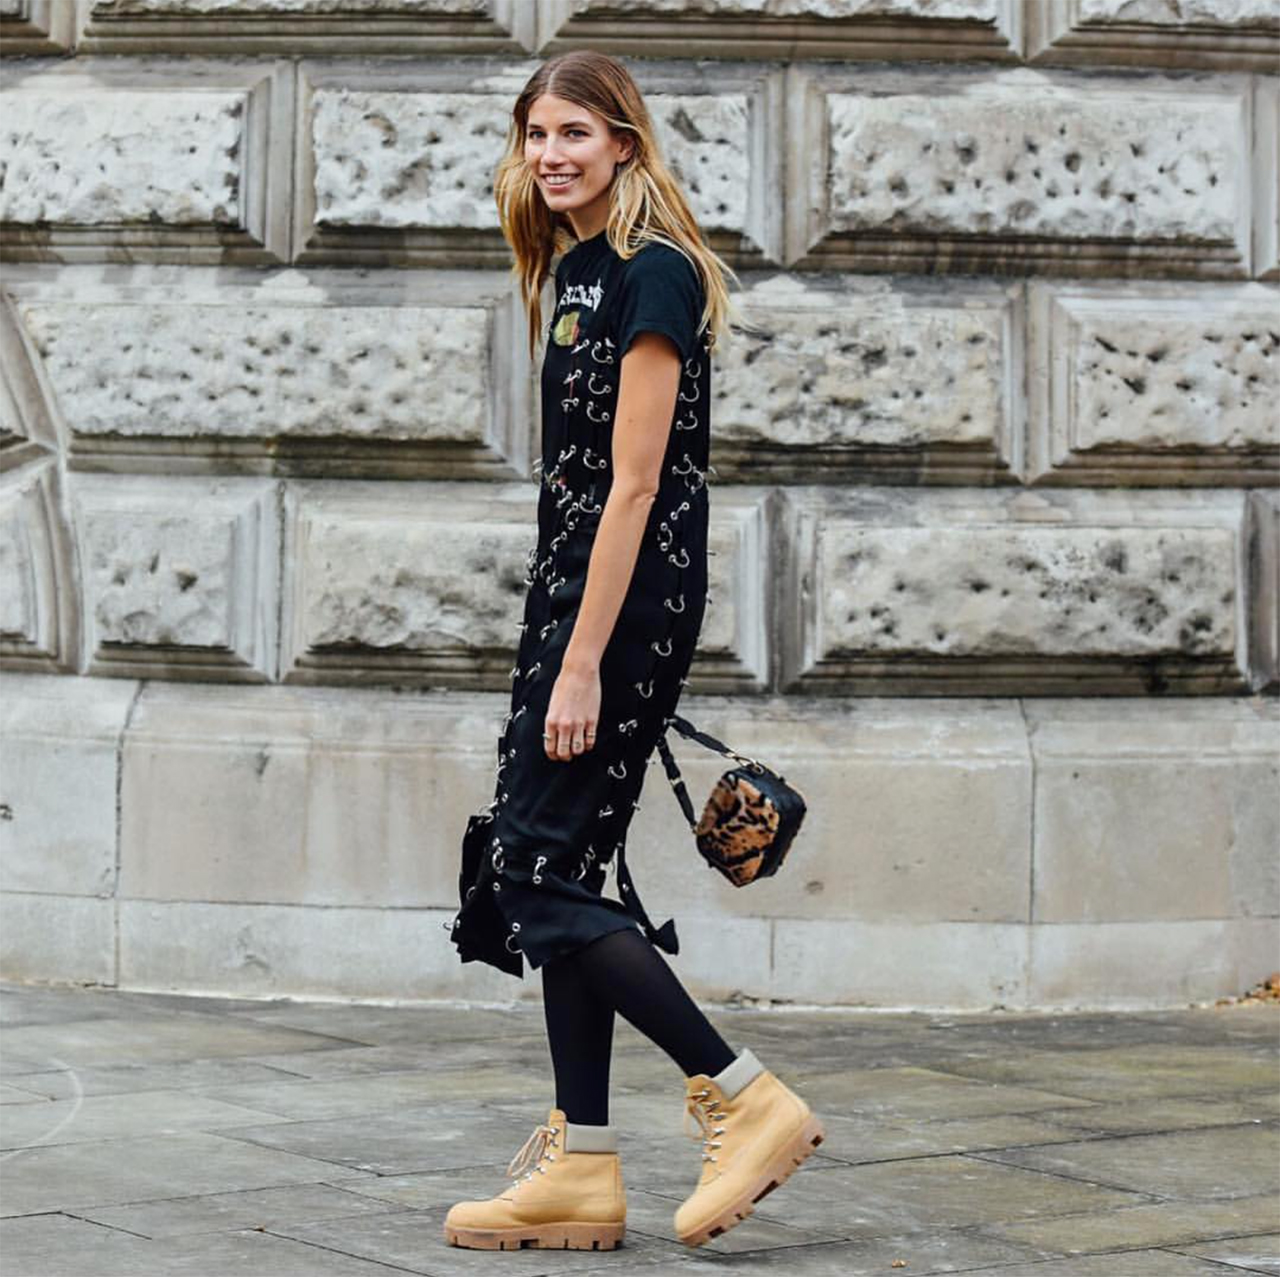 Profile on style icon and Instagram star Veronika Heilbrunner - Grazia